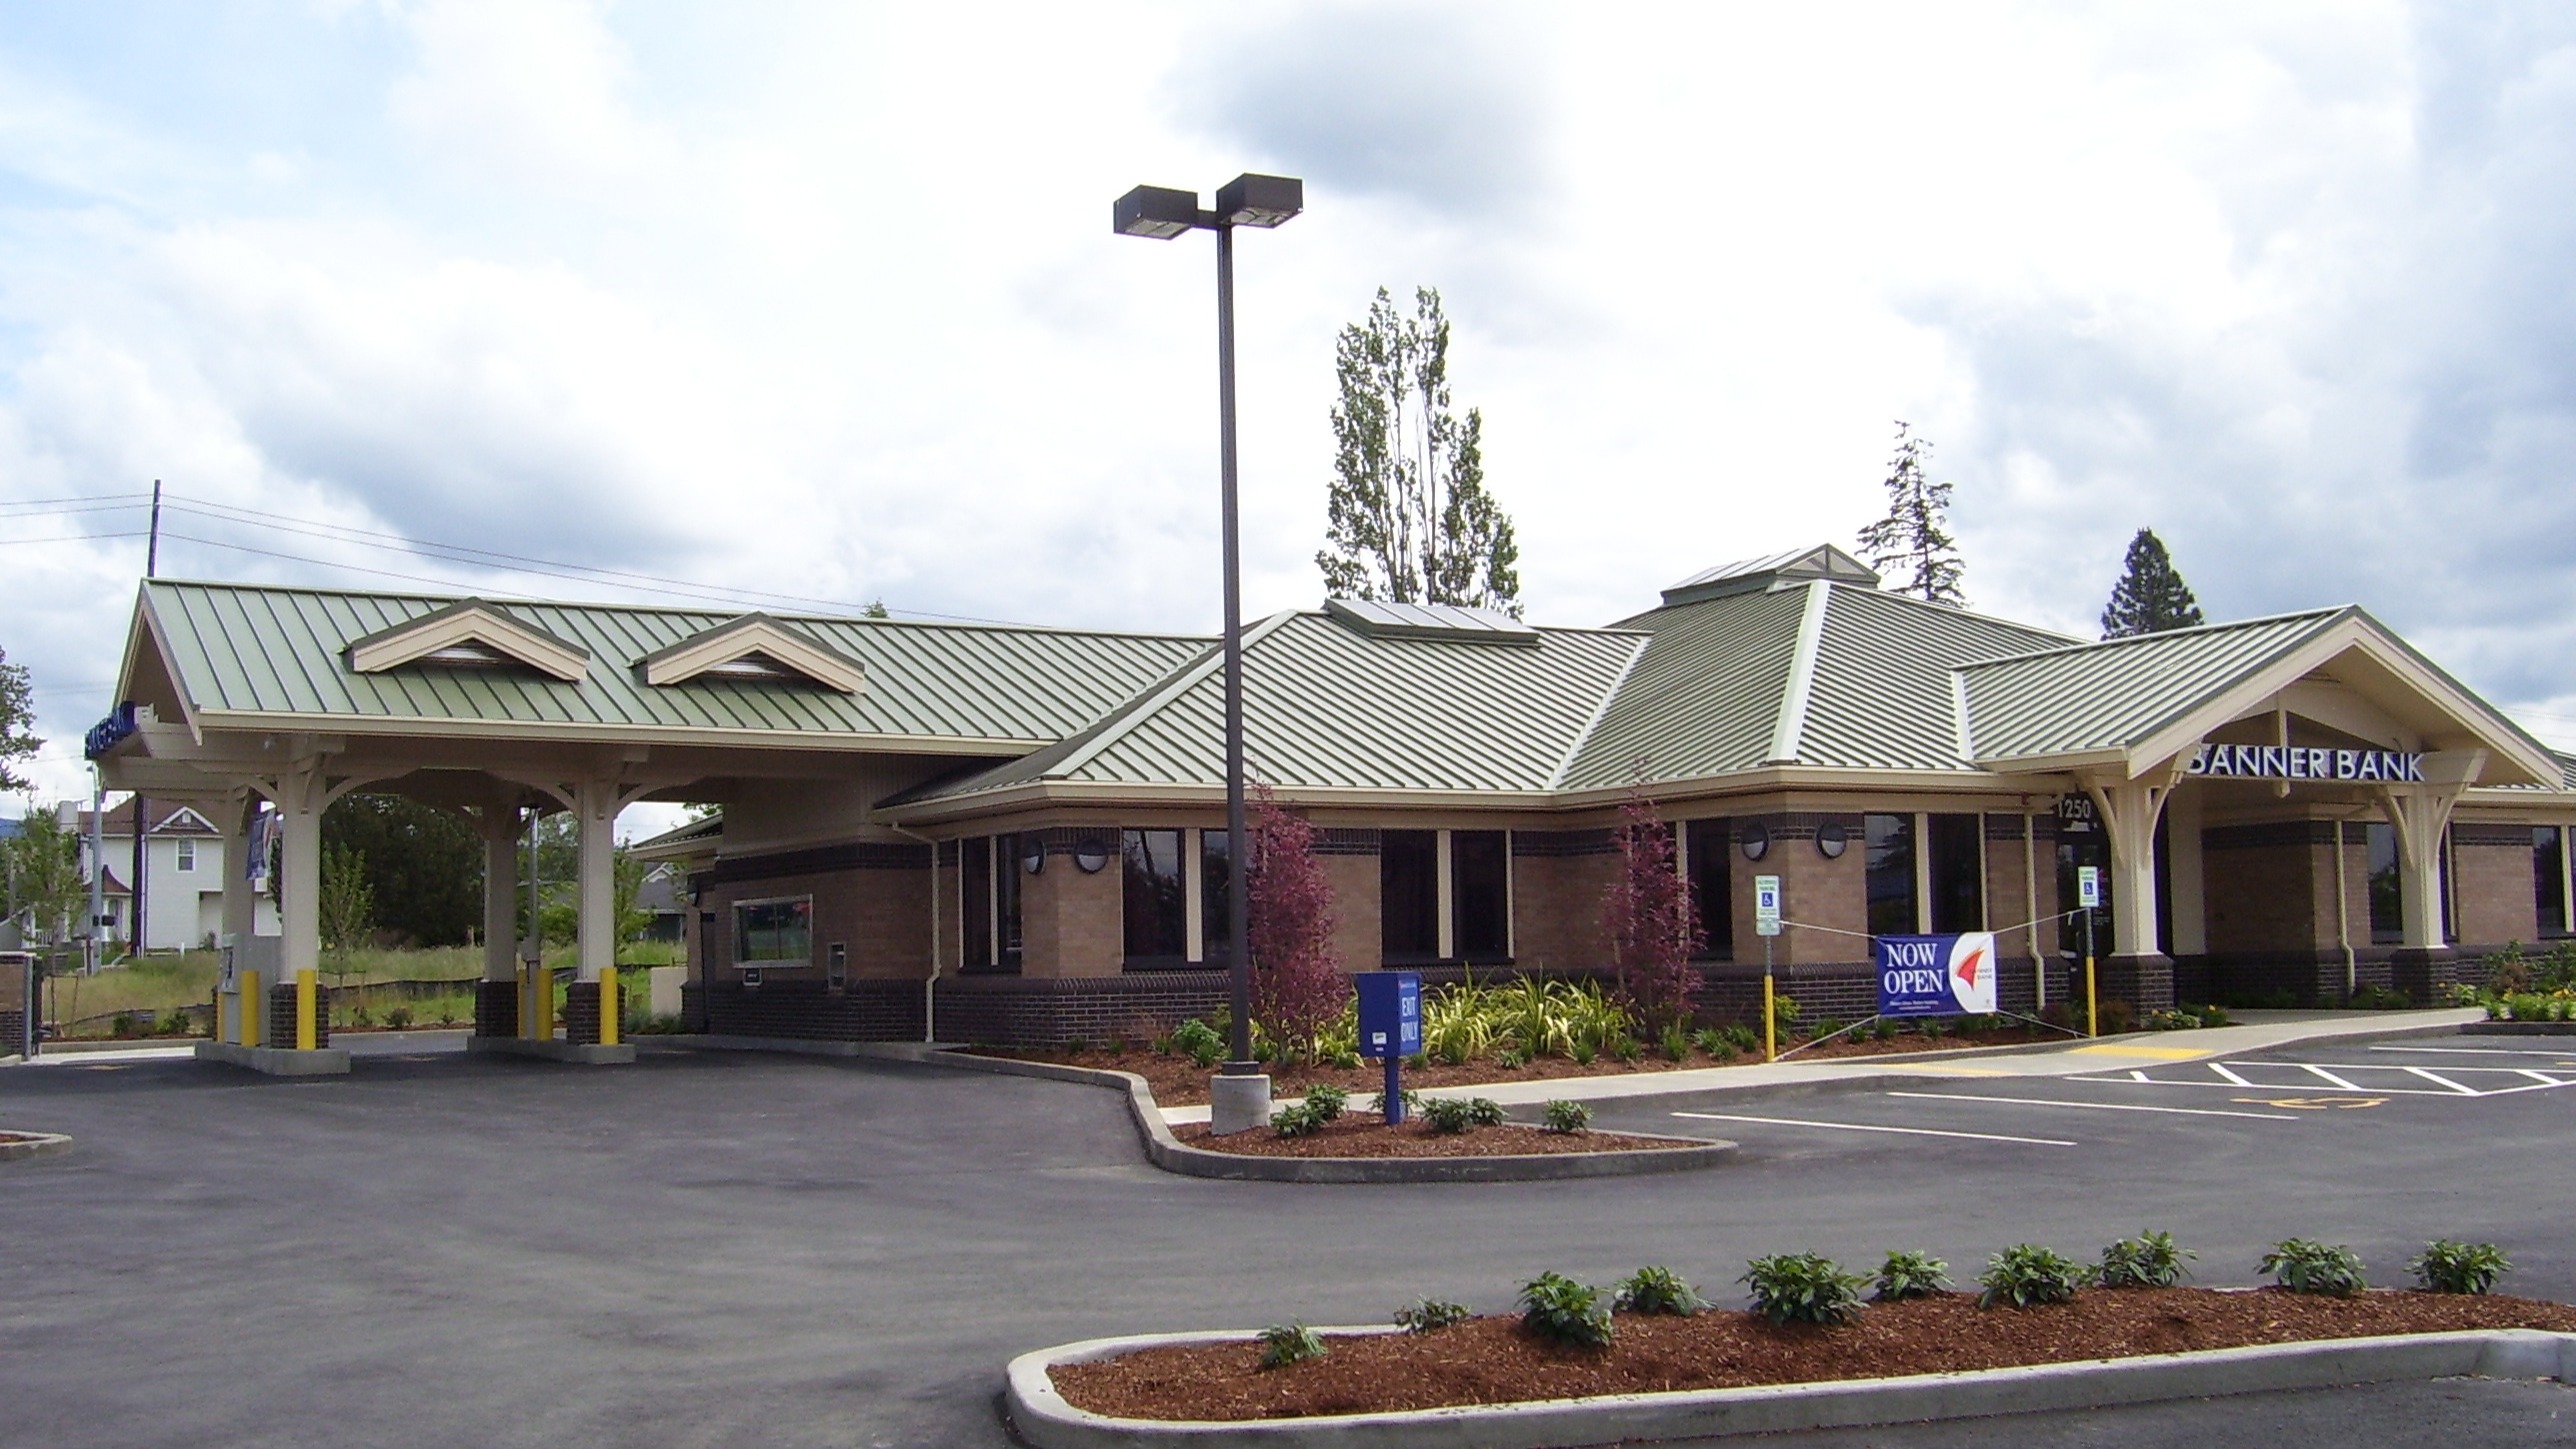 Banner Bank Barkely Boulevard branch in Bellingham, Washington